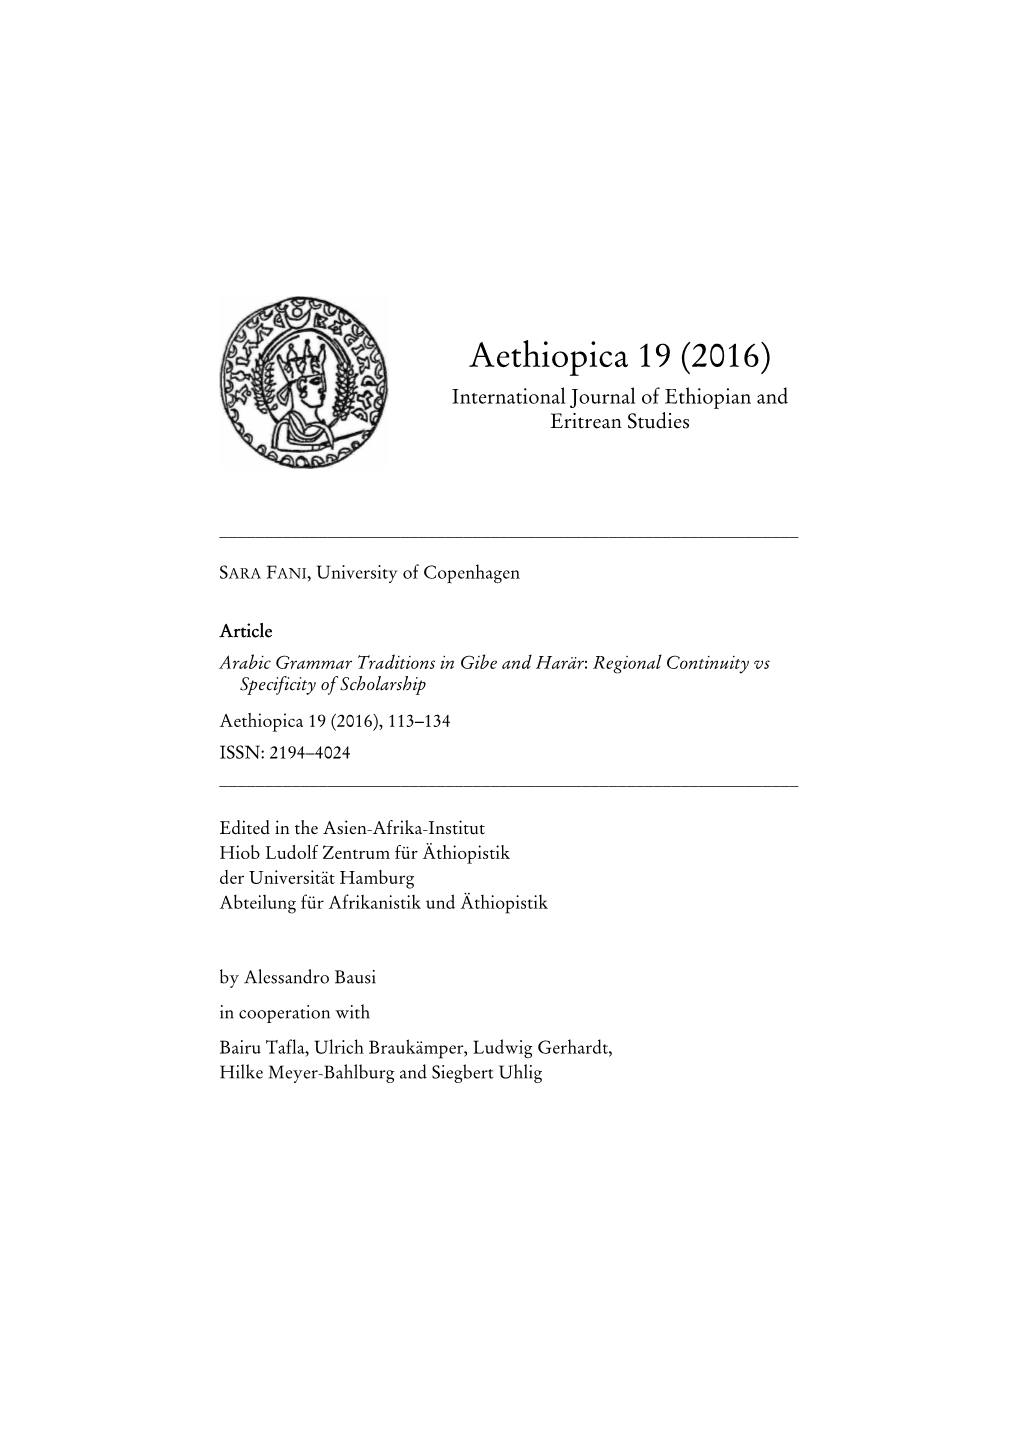 Aethiopica 19 (2016) International Journal of Ethiopian and Eritrean Studies